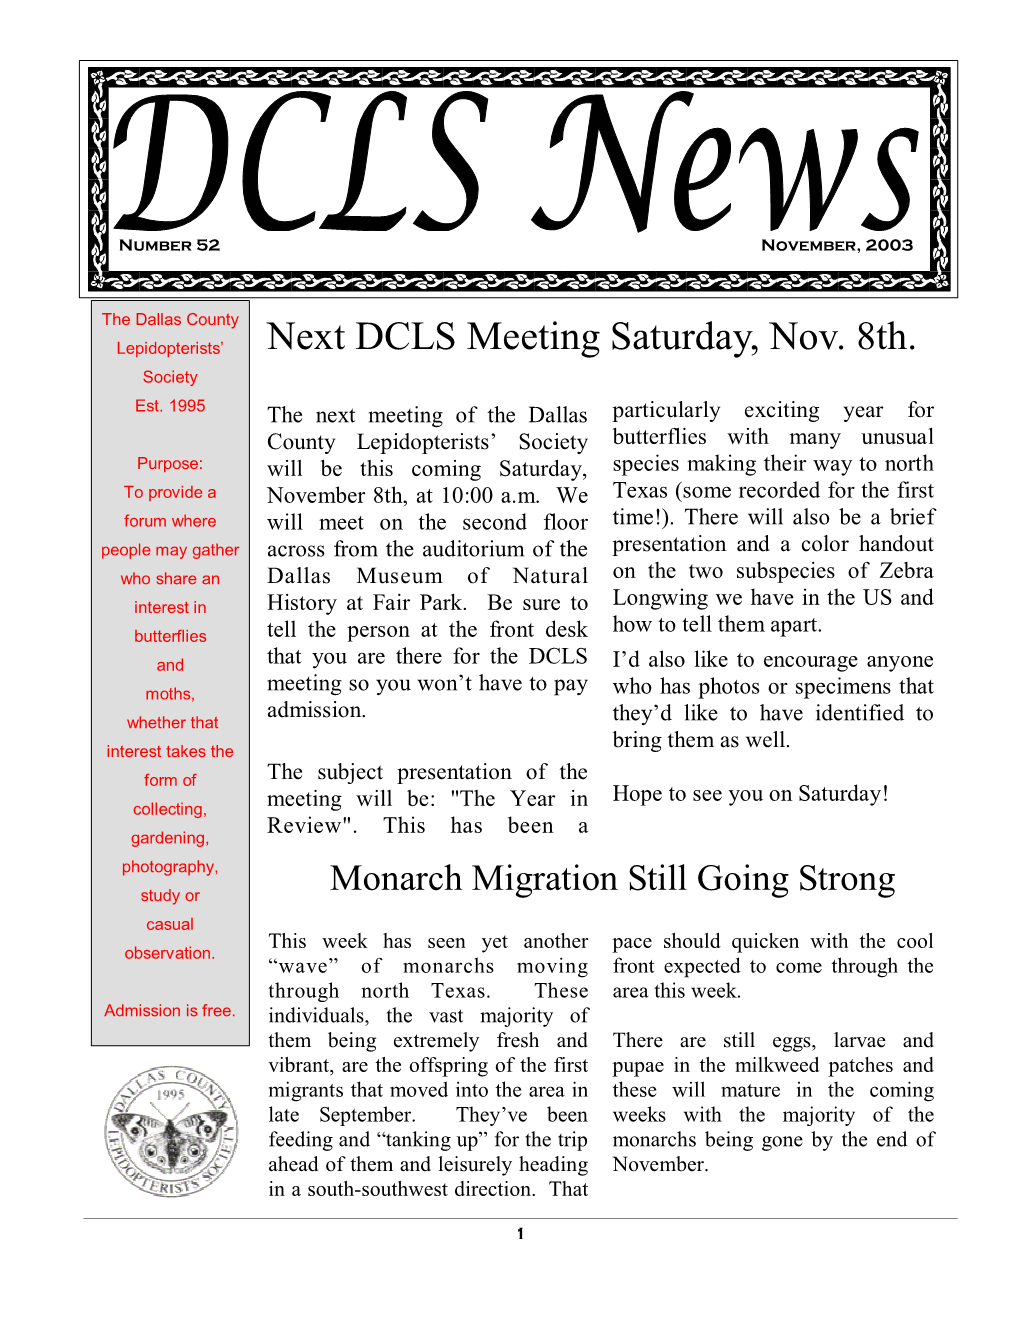 DCLS NEWS November, 2003